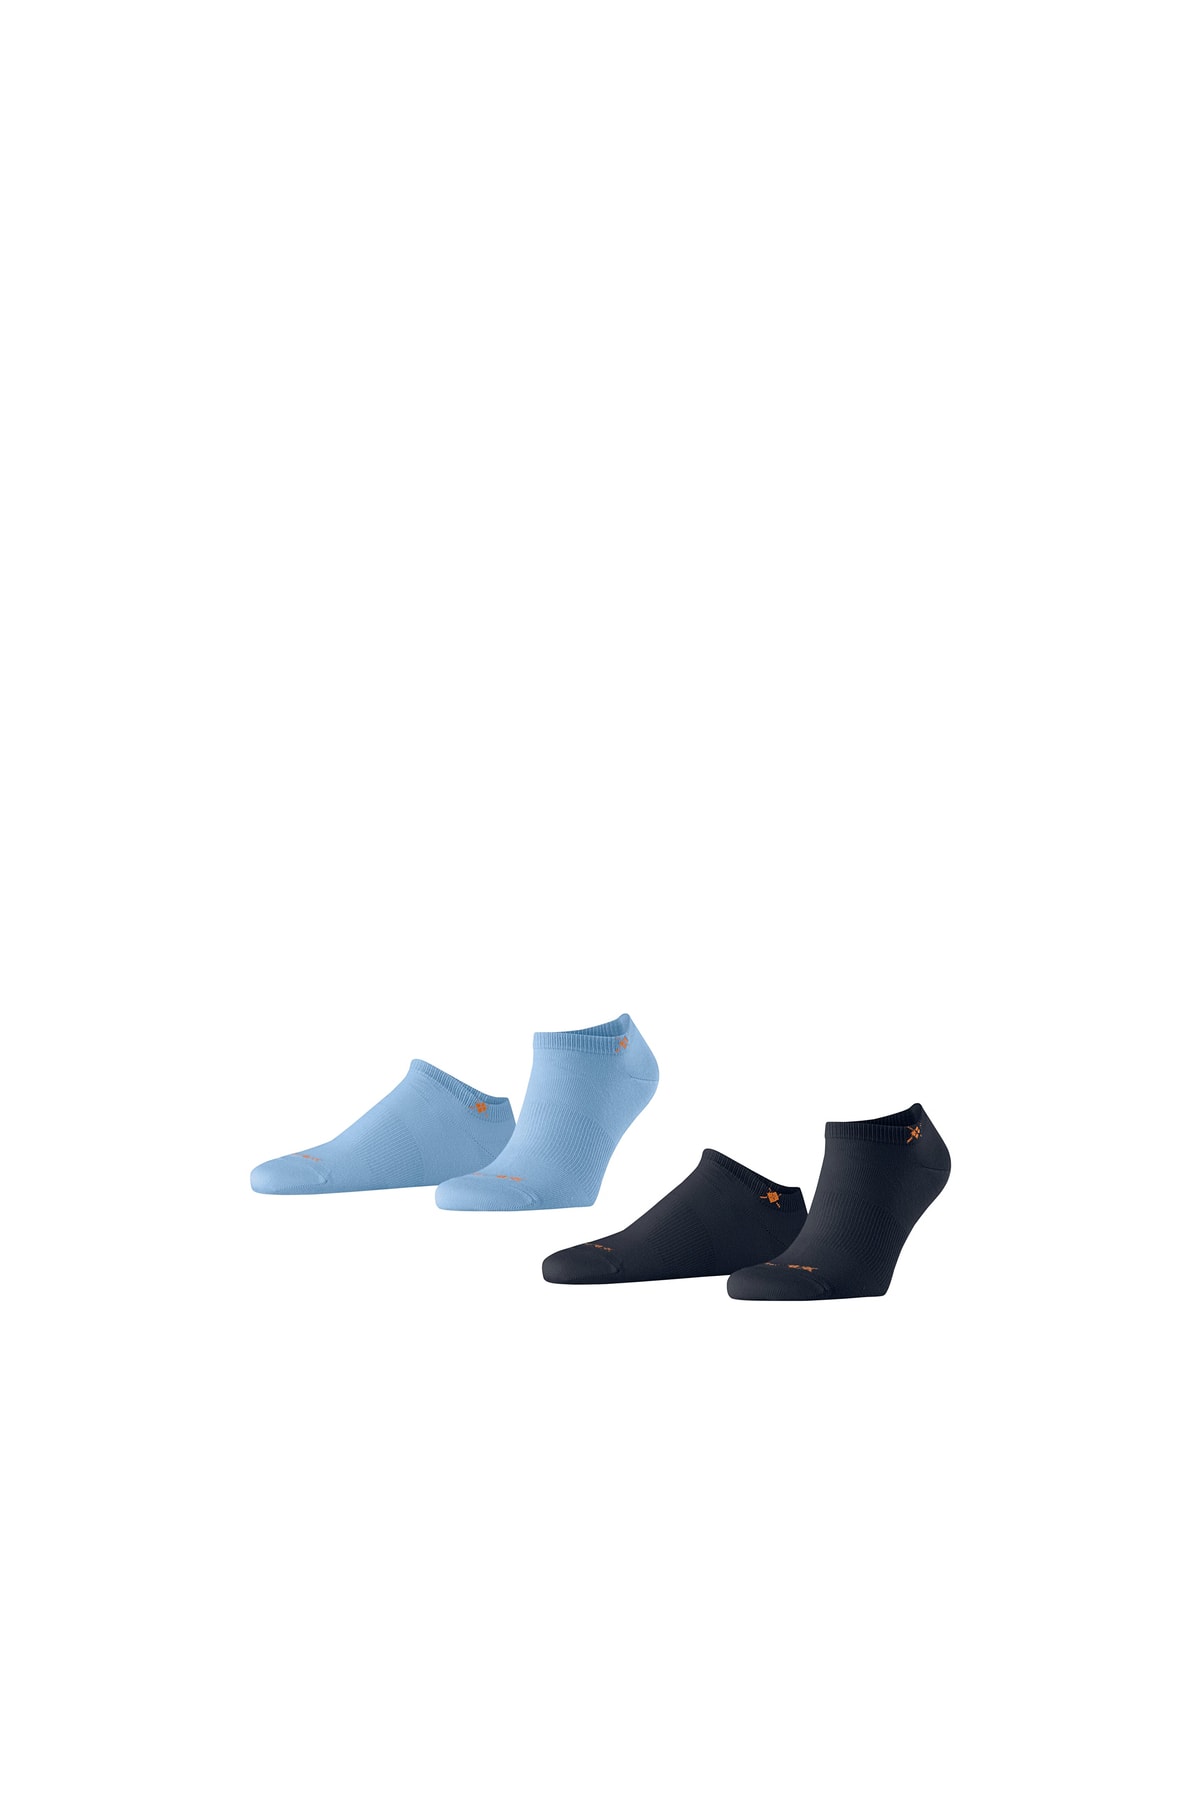 FALKE Socken Blau Casual Fast ausverkauft